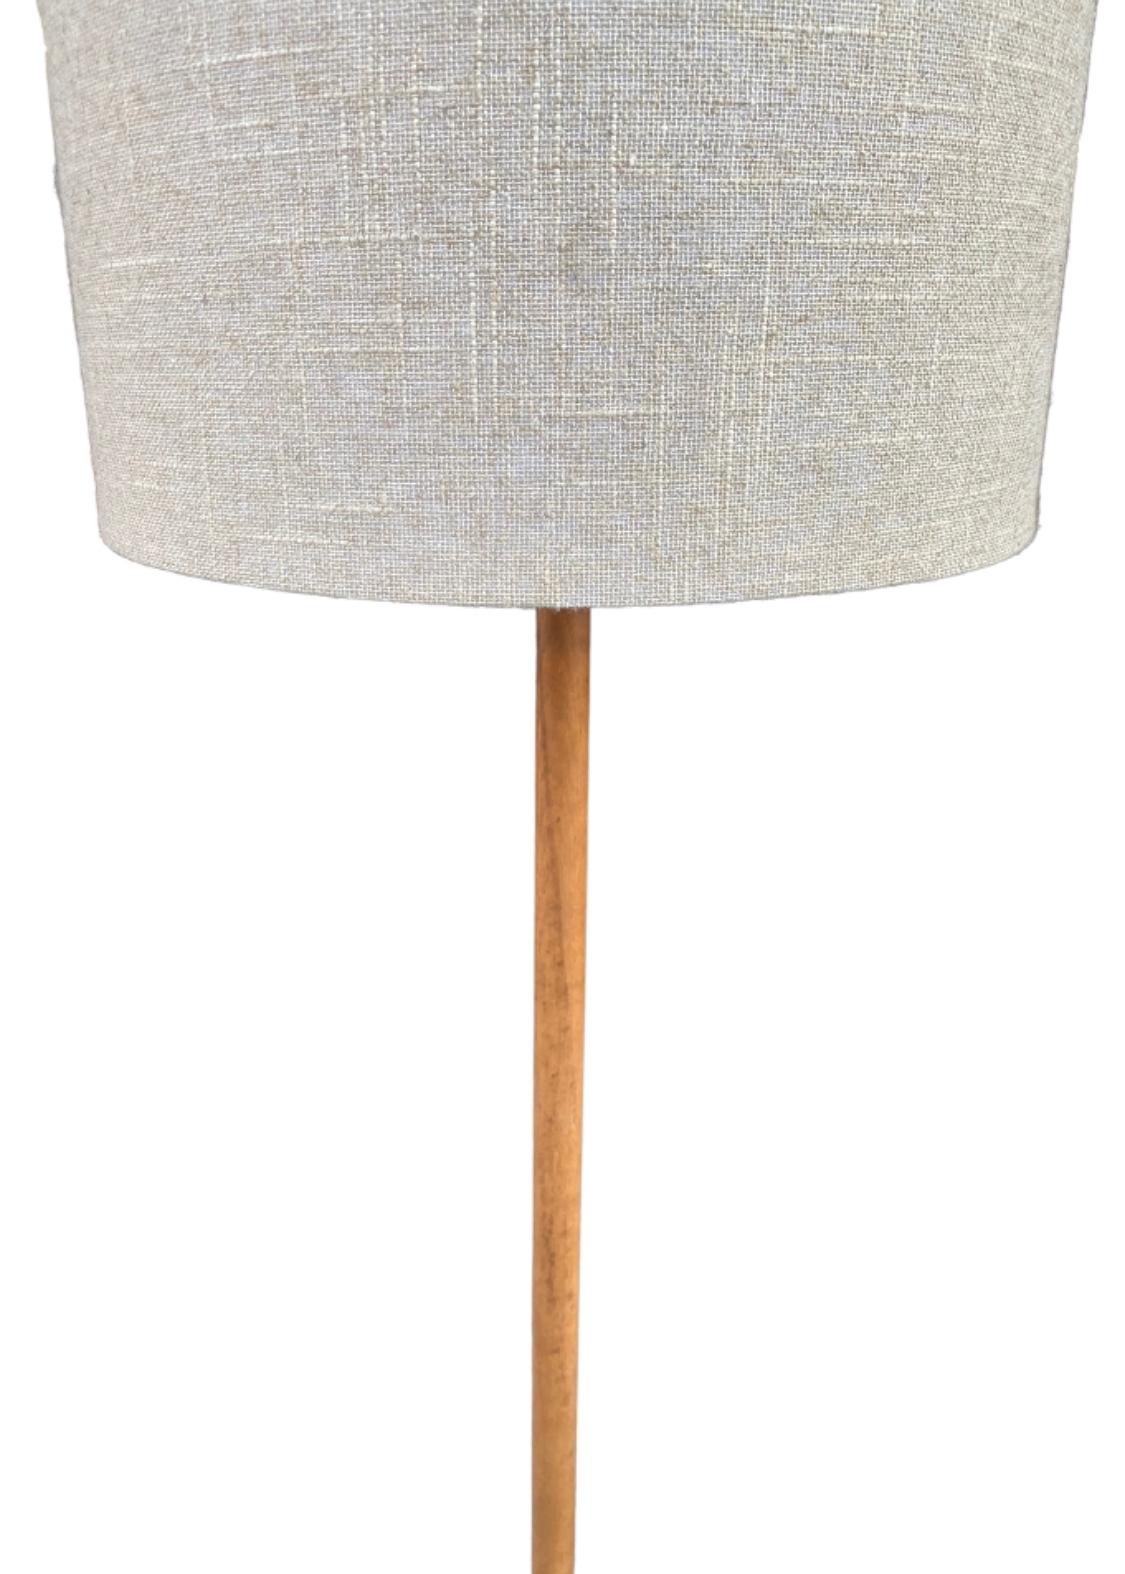 20th Century Elegant Laurel Lamp Company Midcentury Modern Floor Lamp